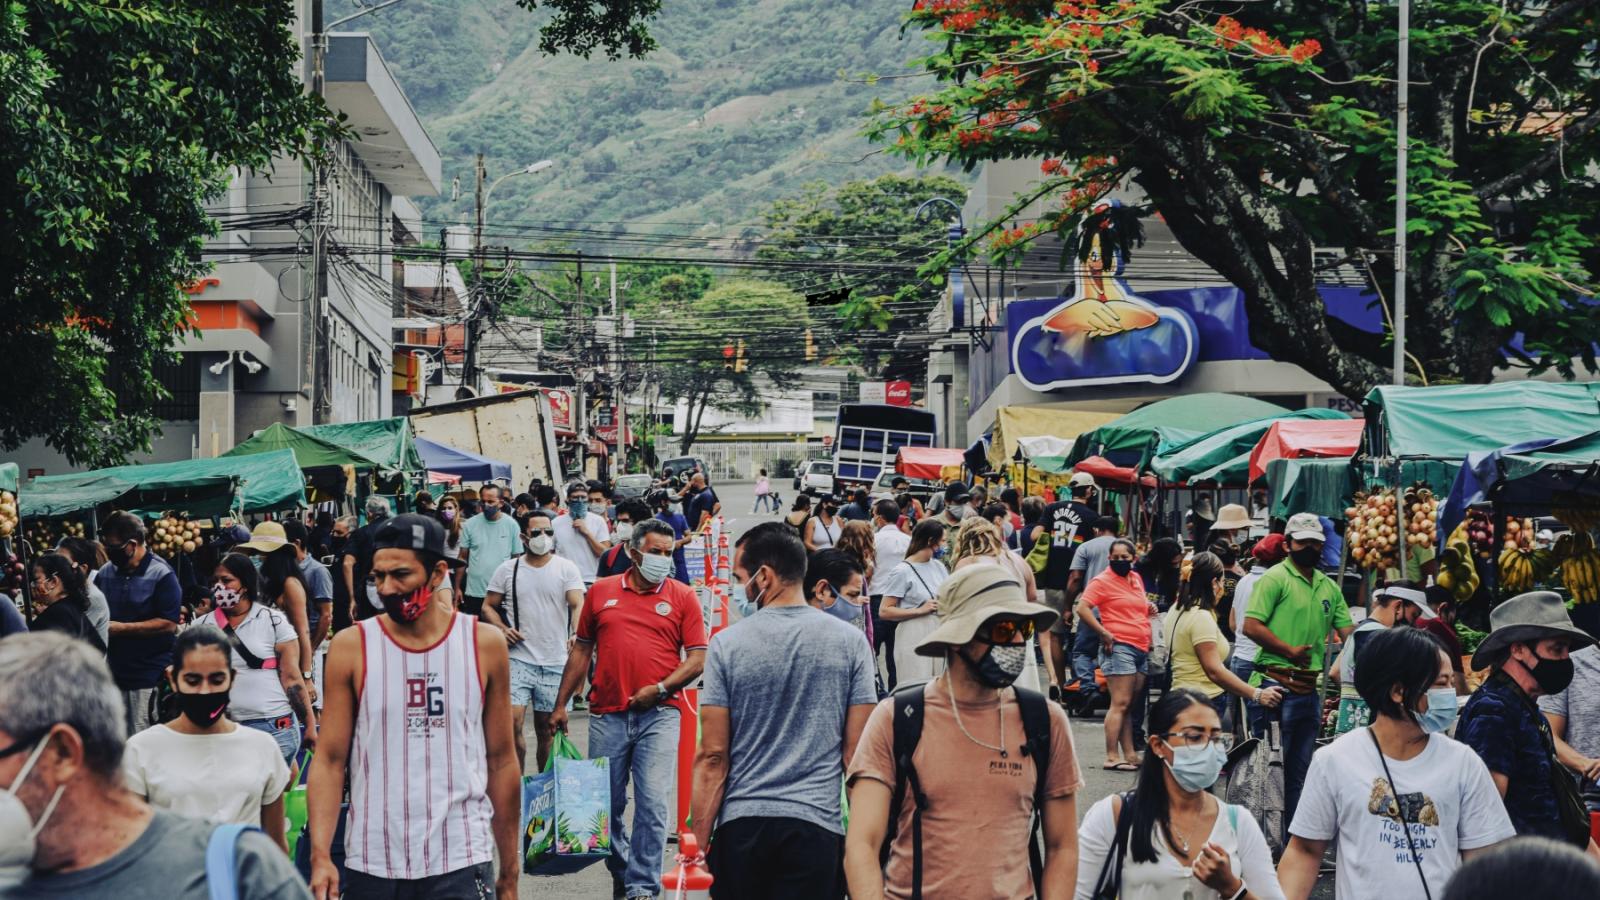 Costa Rica - Personnes marchant dans une rue bordée d'arbres